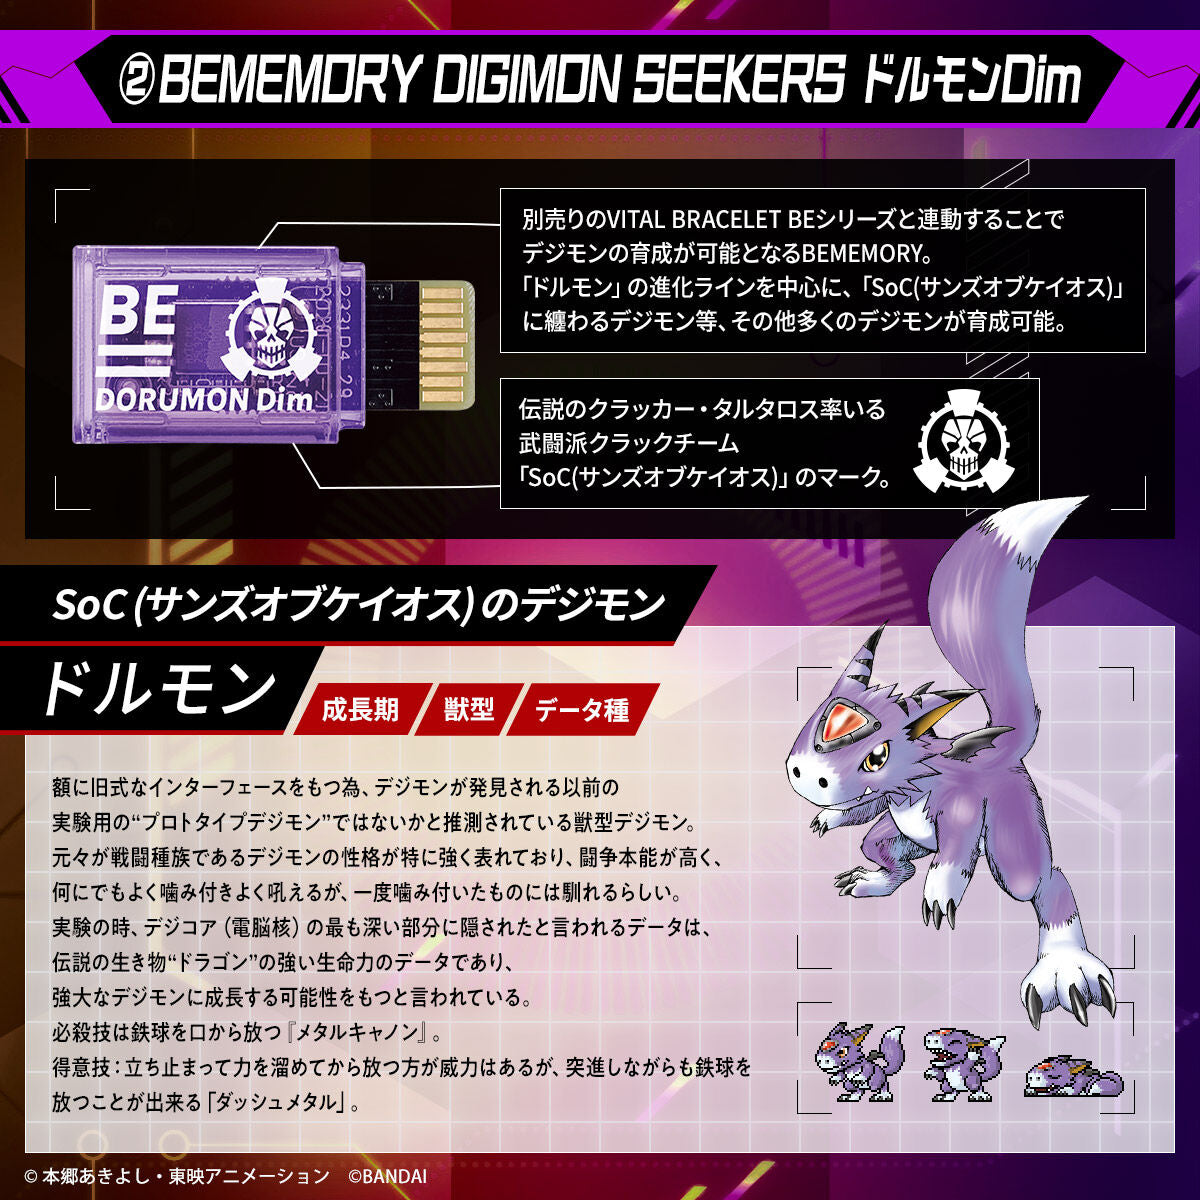 BEMEMORY Digimon Seekers Ryudamon & Dorumon Dim